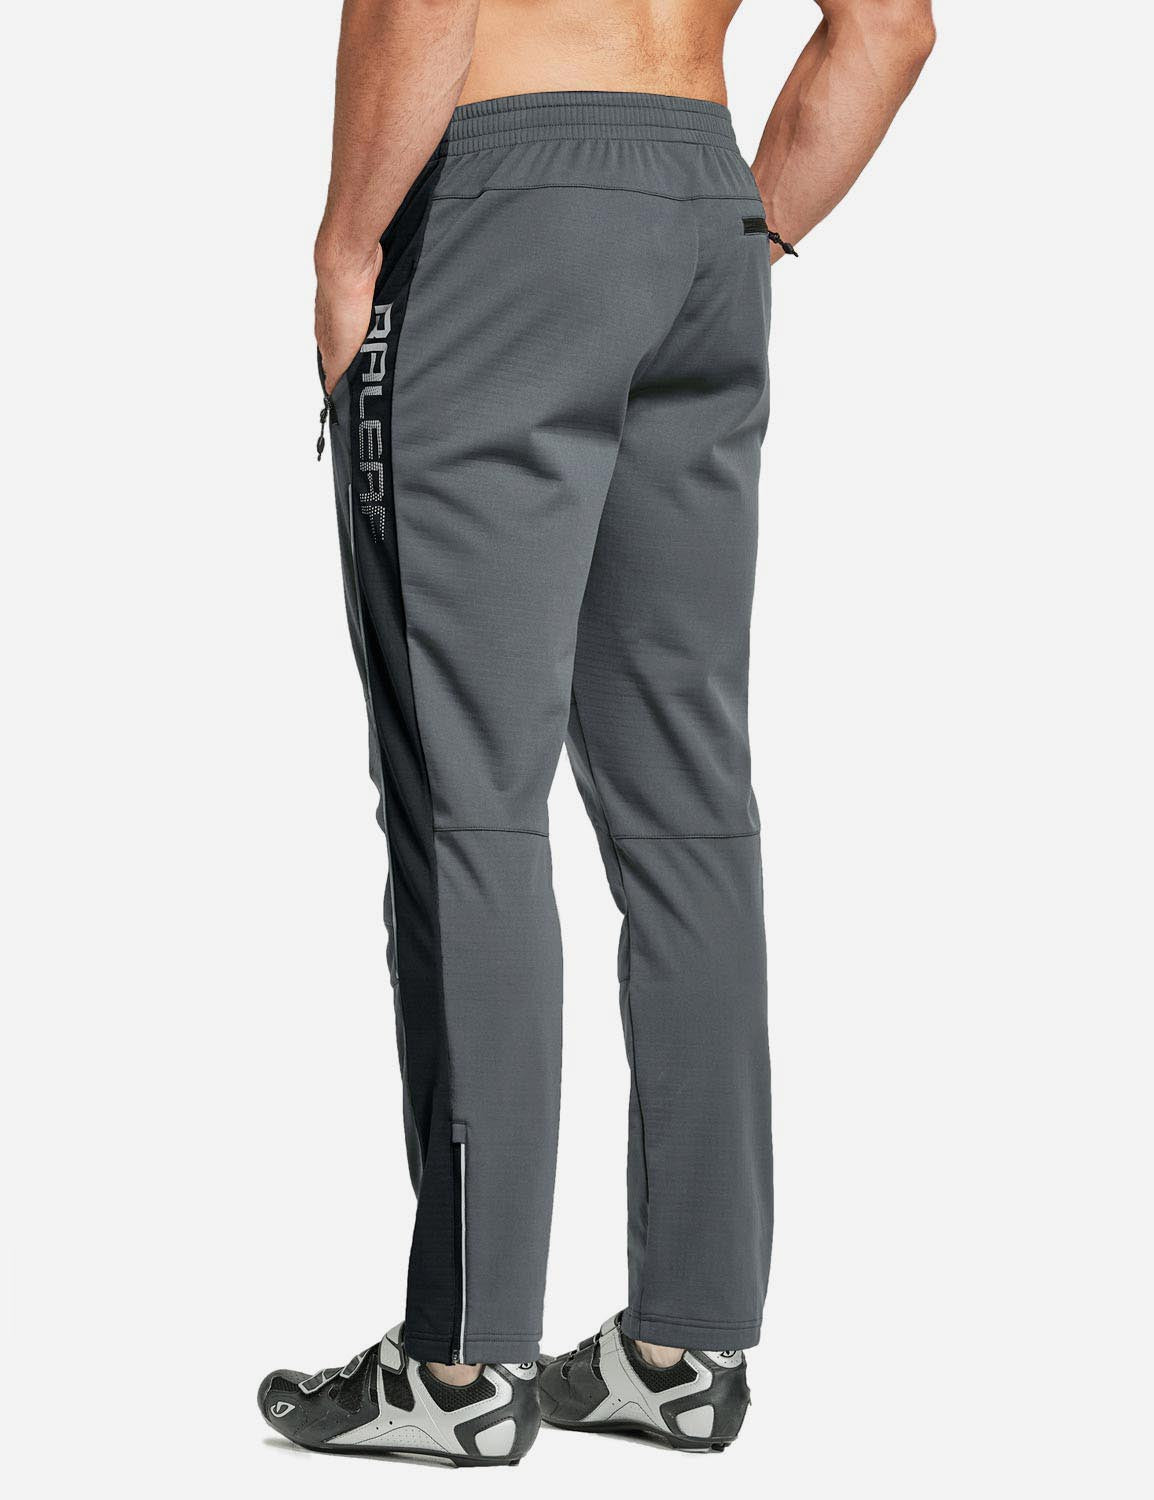 Baleaf Men's Thermal Fleece-Lined Windproof Pocketed Sweat Pants aai076 Gray/Black Back